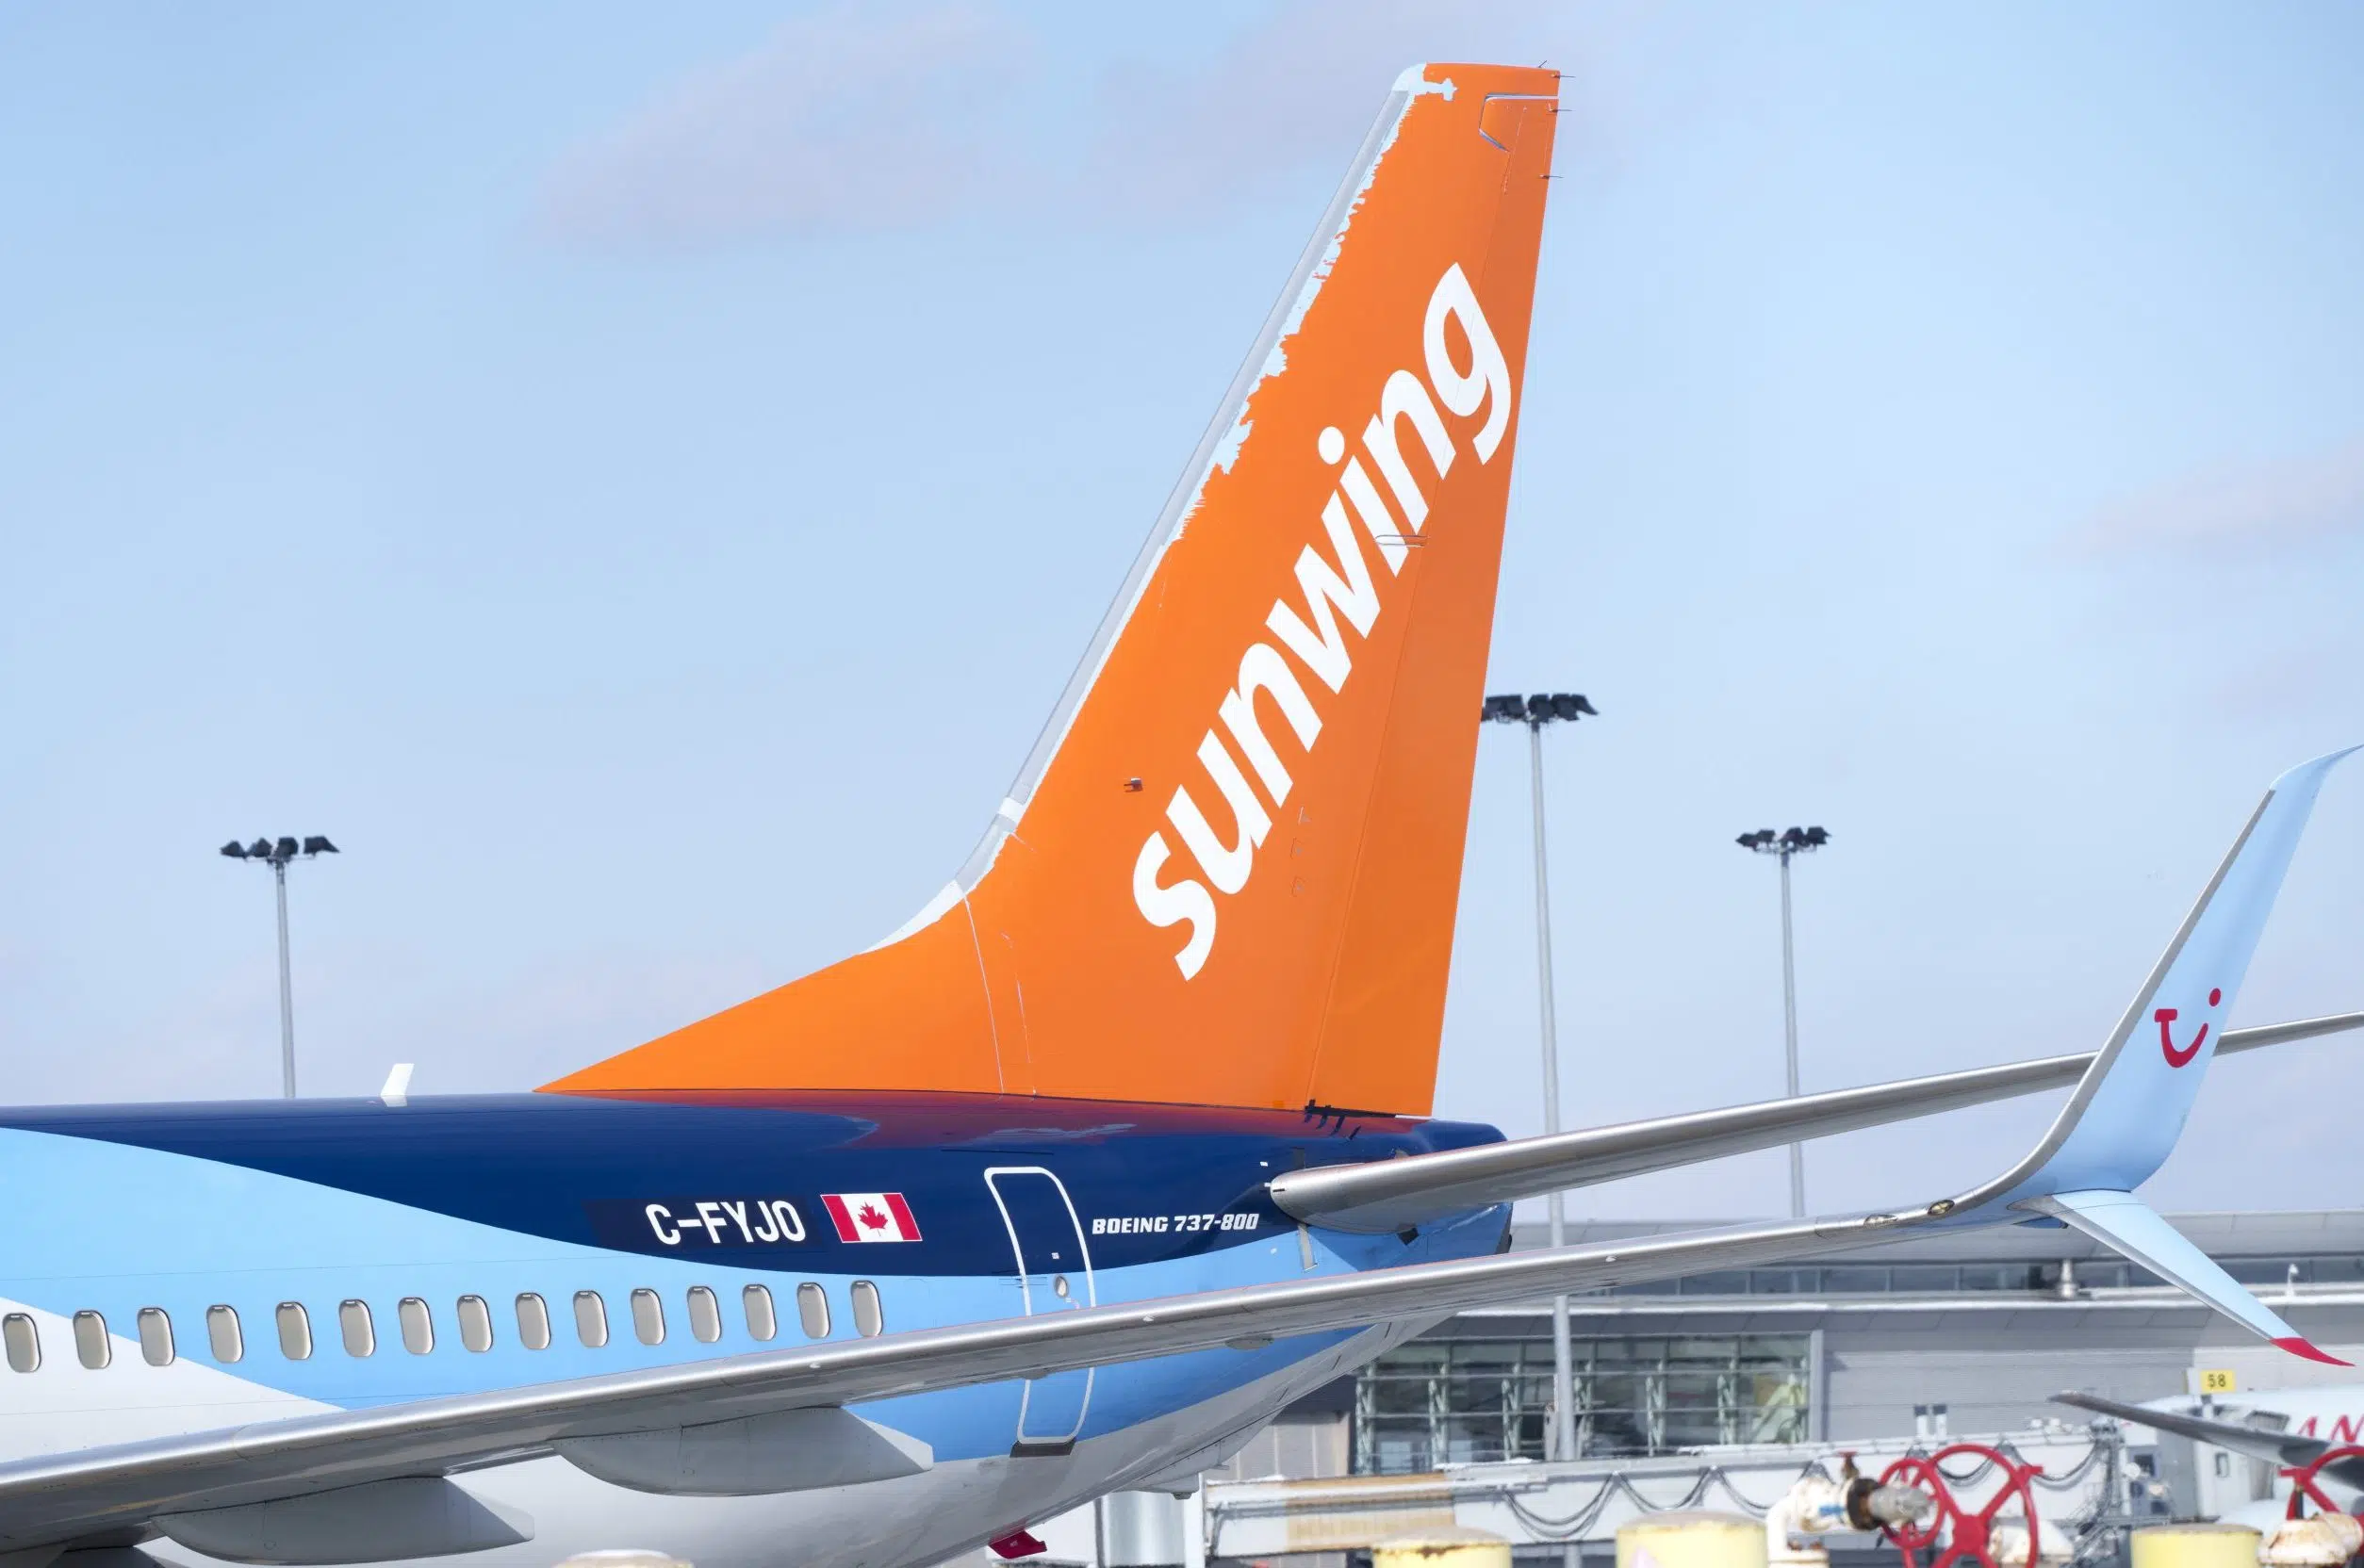 'Keep on them:' Saskatchewan Sunwing passenger offers advice to others